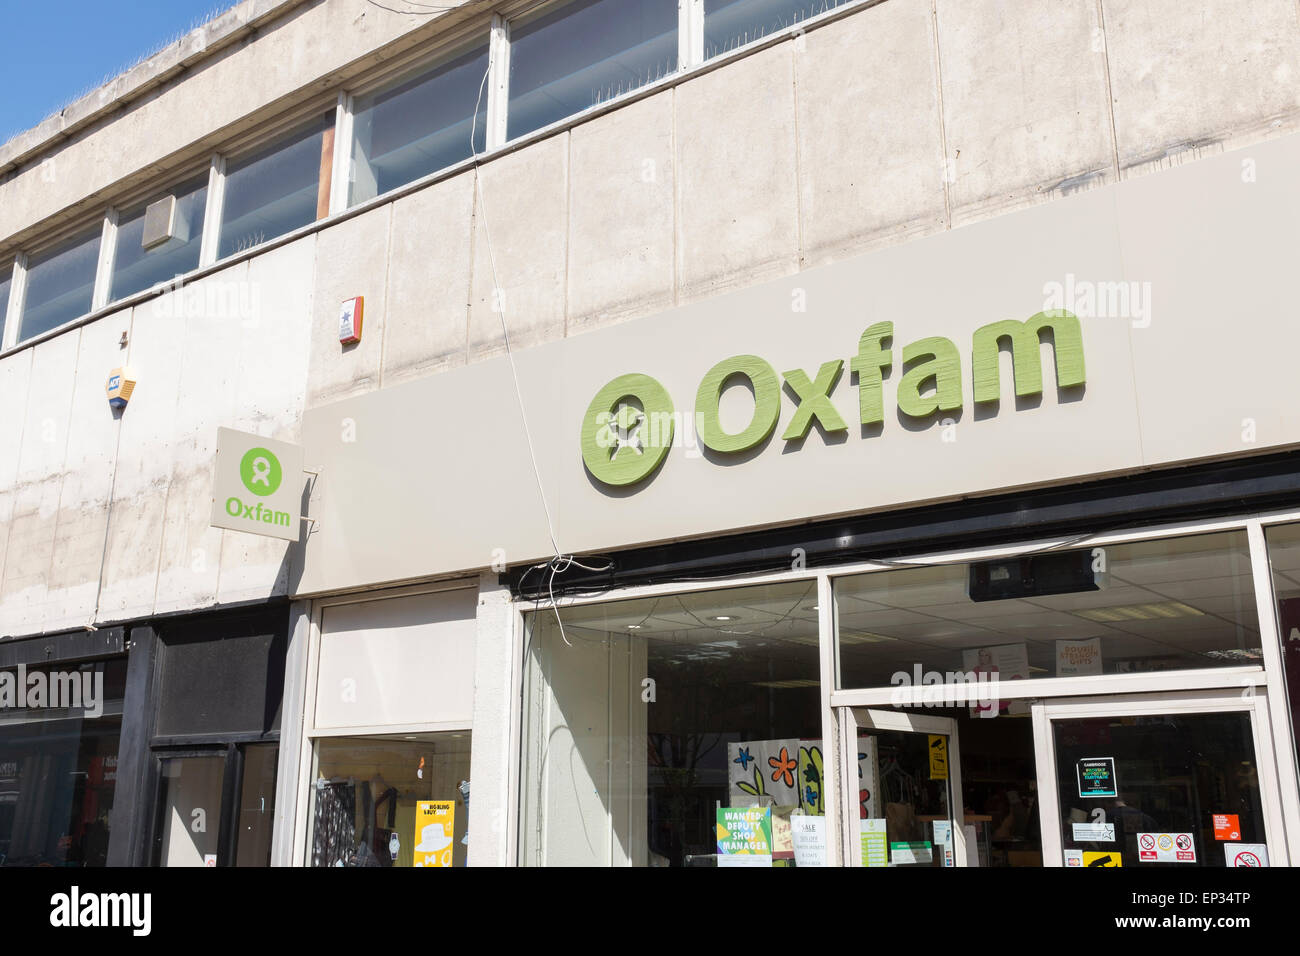 Oxfam charity shop and signage logo Burleigh Street Cambridge city England Stock Photo